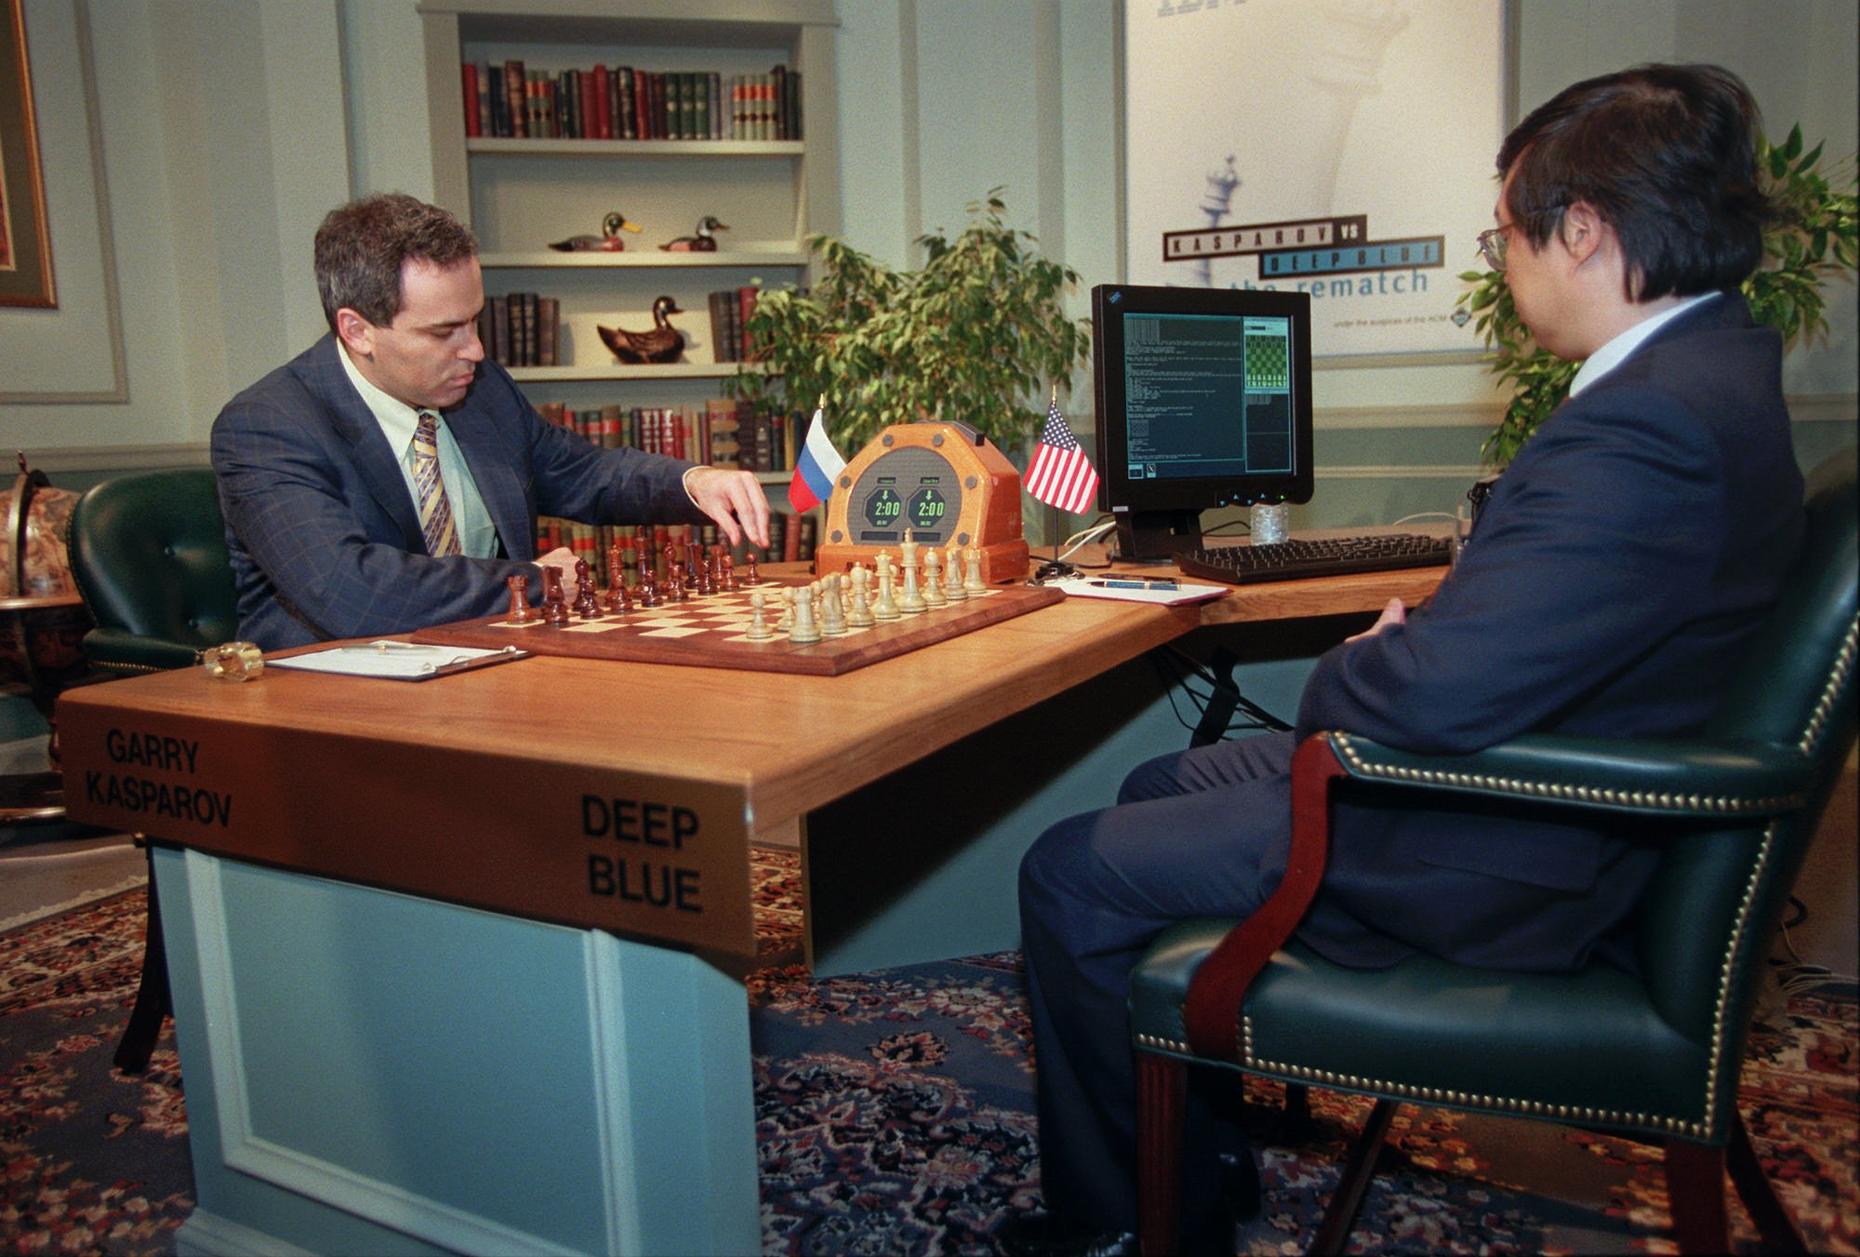 Garry Kasparov in action during match vs the IBM supercomputer